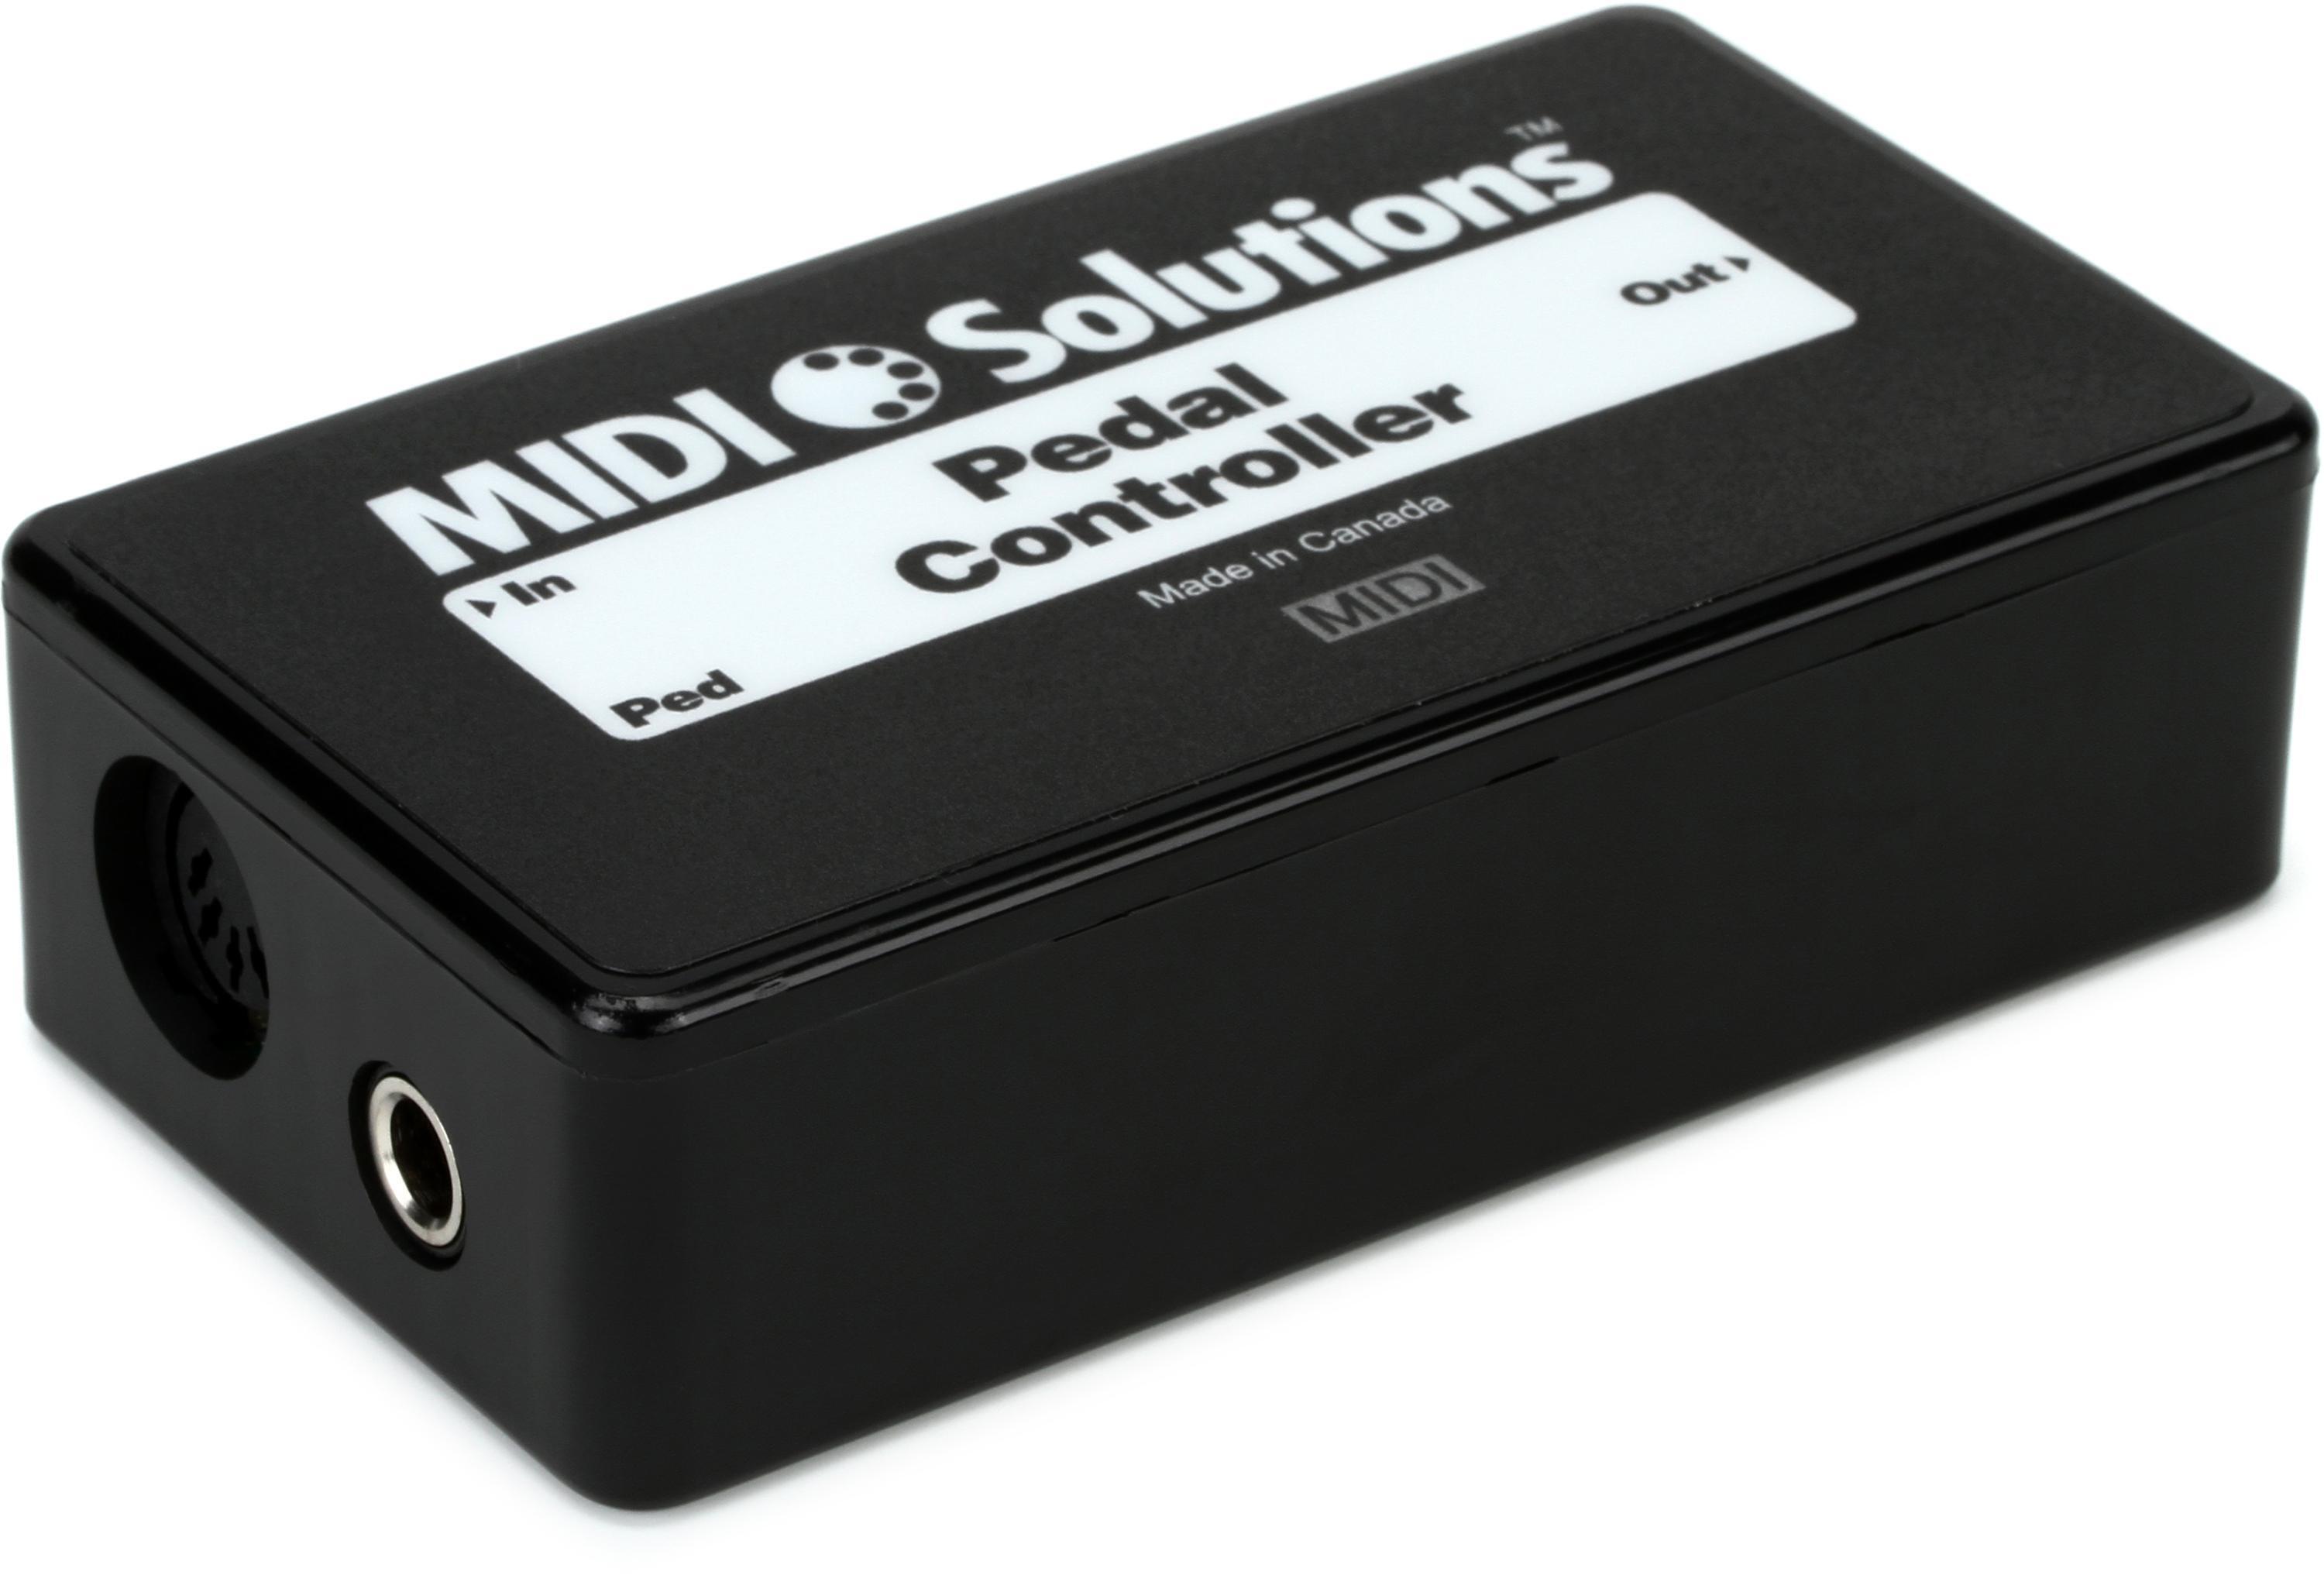 MIDI Solutions Pedal Controller Expression Pedal MIDI Data